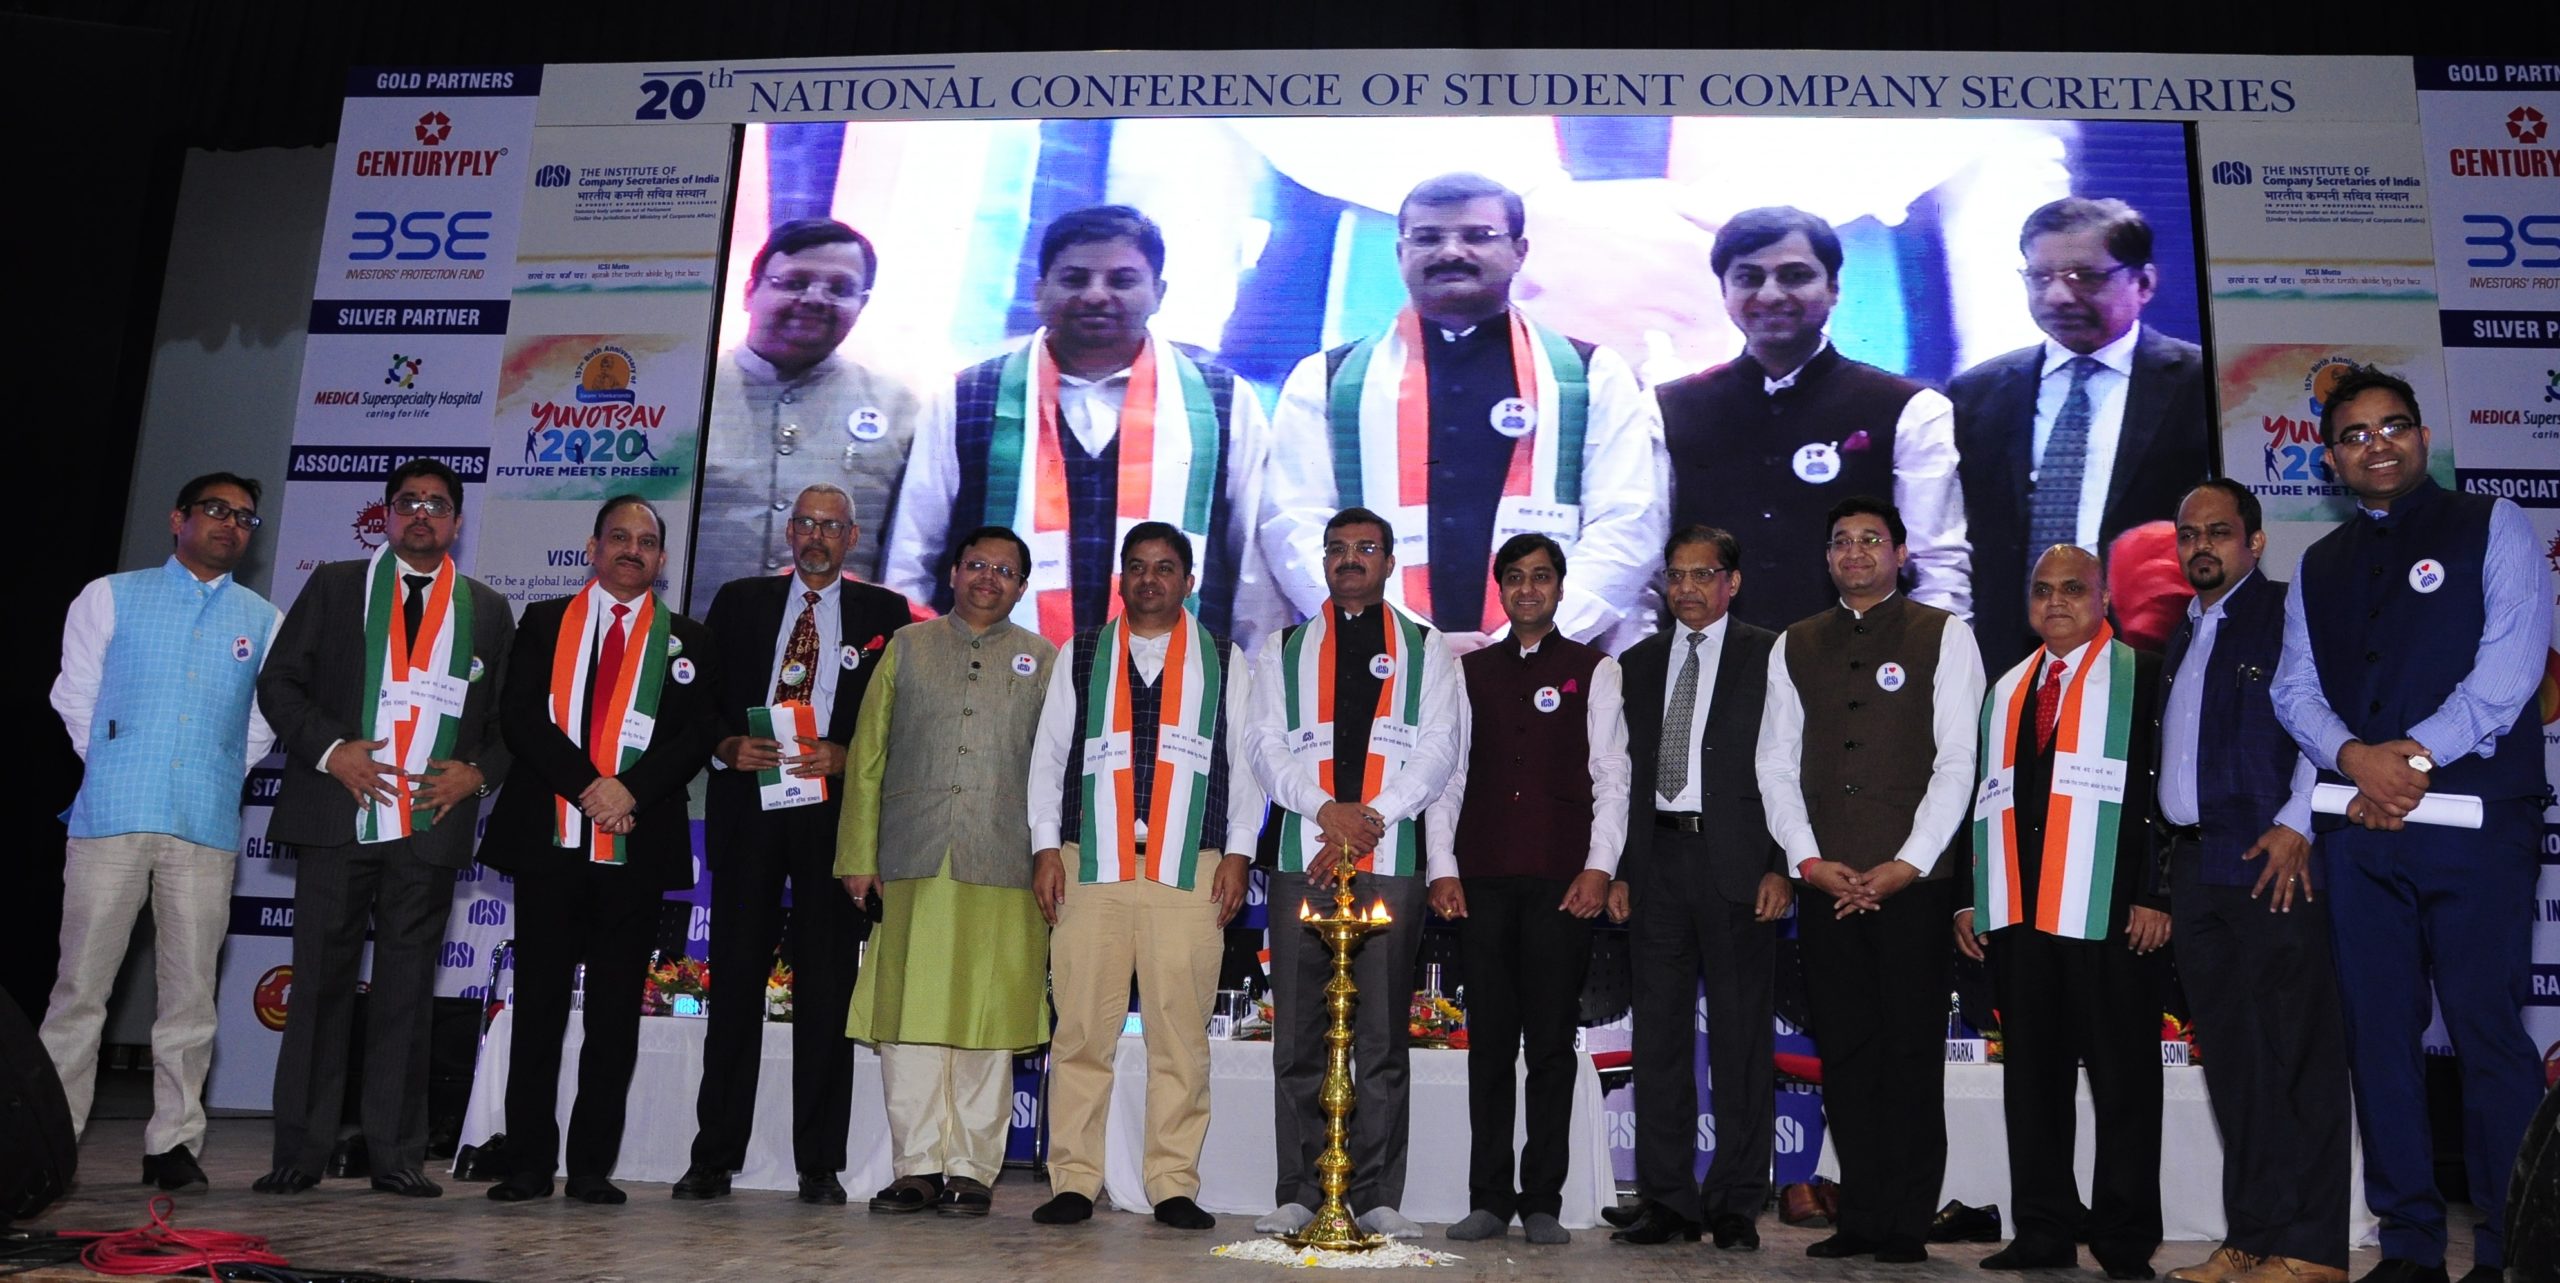 (Left to Right) - CS Biman Debnath, CS Rajesh Chura, CS Ashok Dixit, CS B Narasimham, CS Deepak Khaitan, CS Praveen Soni, CS Ranjeet Pandey, CS Ashish Garg, CS Santosh Aggarwal, CS Siddharth Murarka, Sh A K Srivastava, CS Sudhir Banthia and CS Anil Dubey at the 20th National Students Conference "Yuvotsav 2020" organised by The Institute of Company Secretaries of India (ICSI) at Kolkata today.